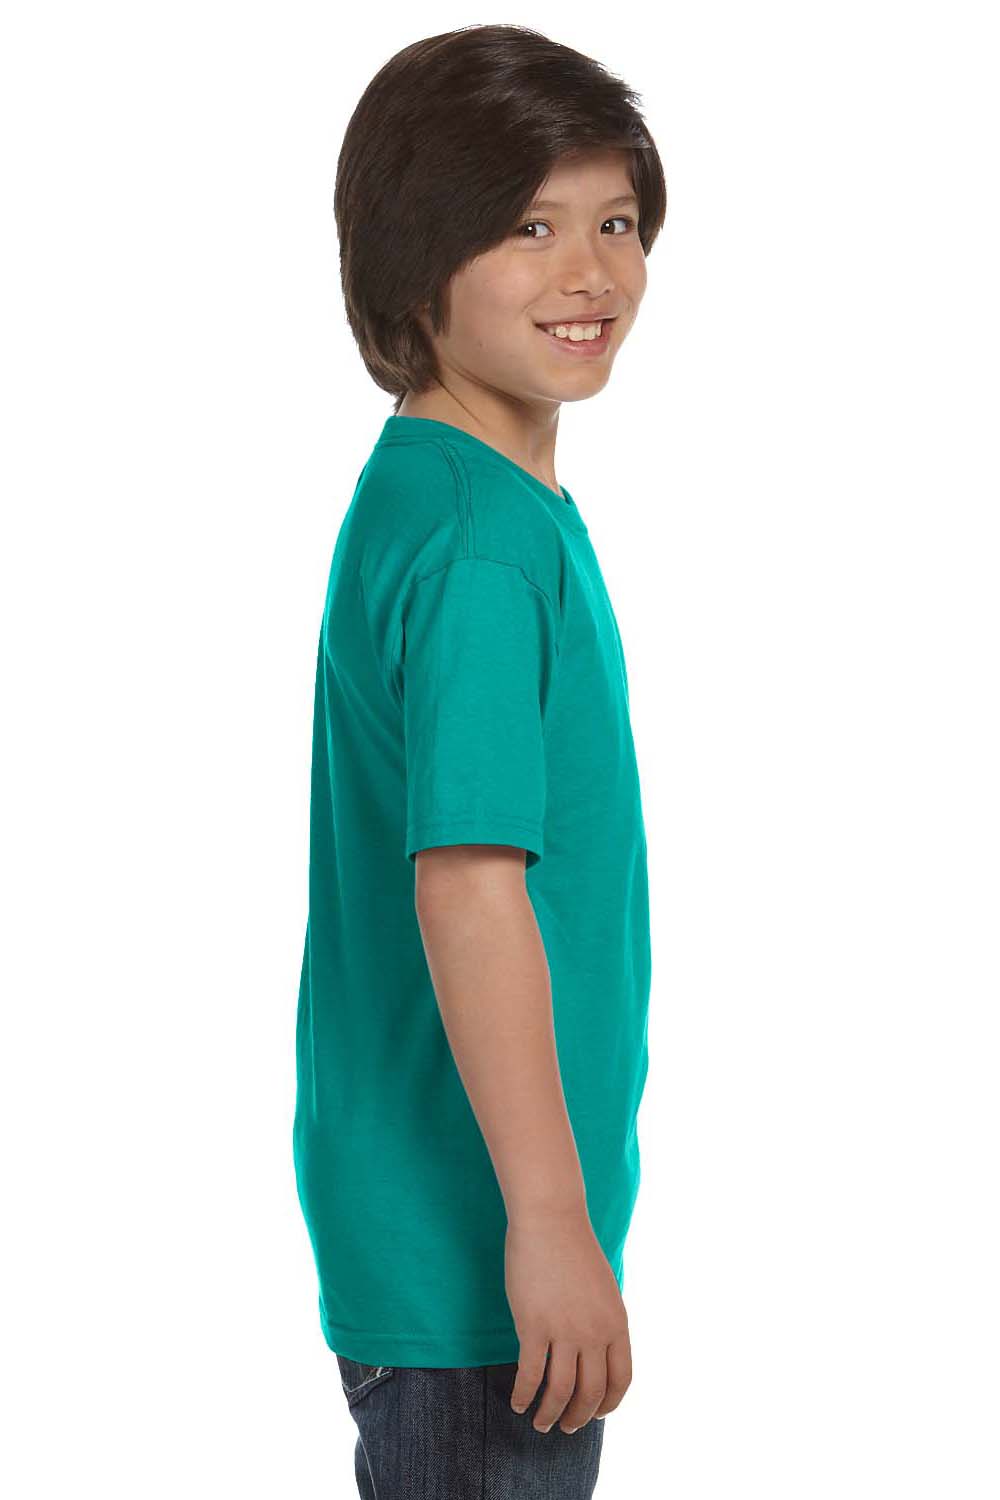 Gildan G800B Youth DryBlend Moisture Wicking Short Sleeve Crewneck T-Shirt Jade Green Side